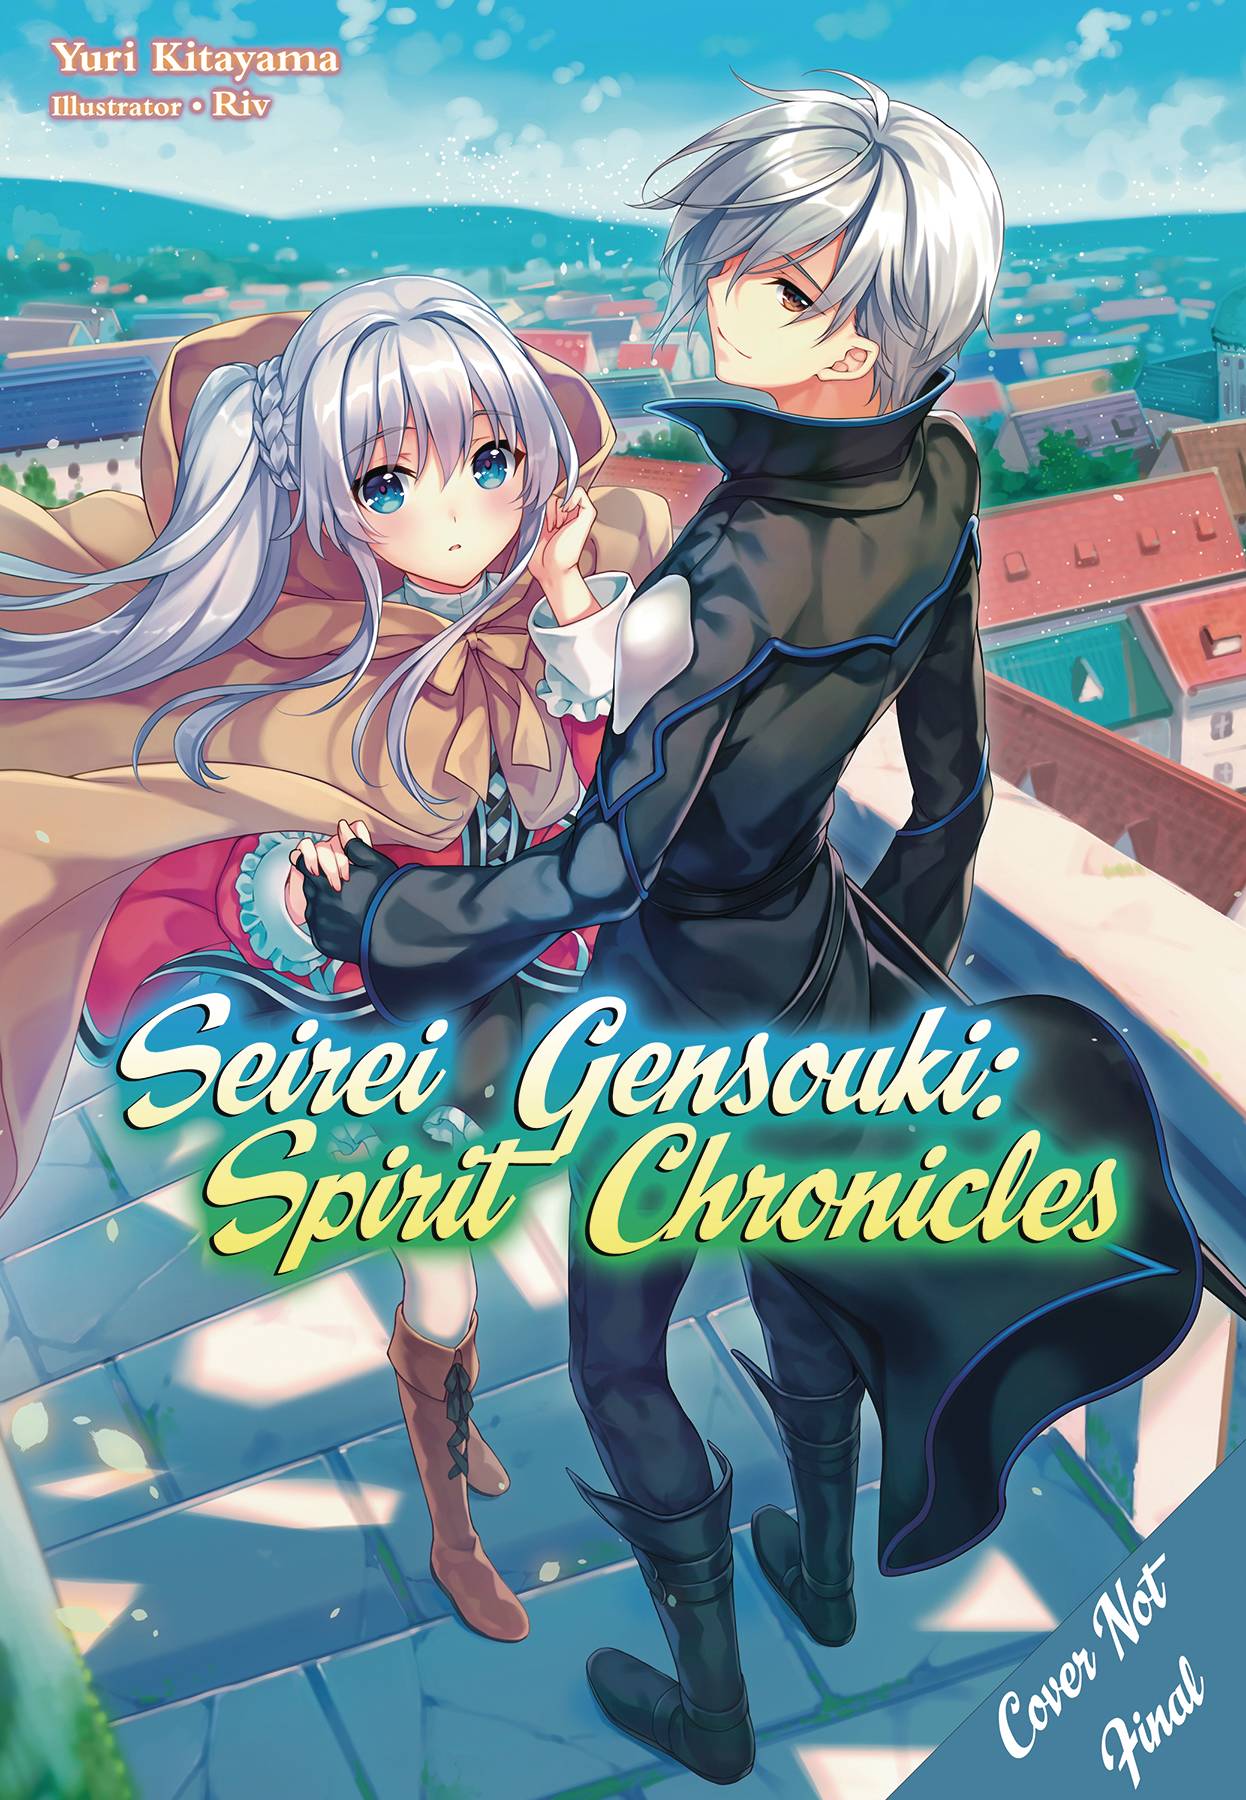 Seirei Gensouki - Spirit Chronicles Novels Get TV Anime - News